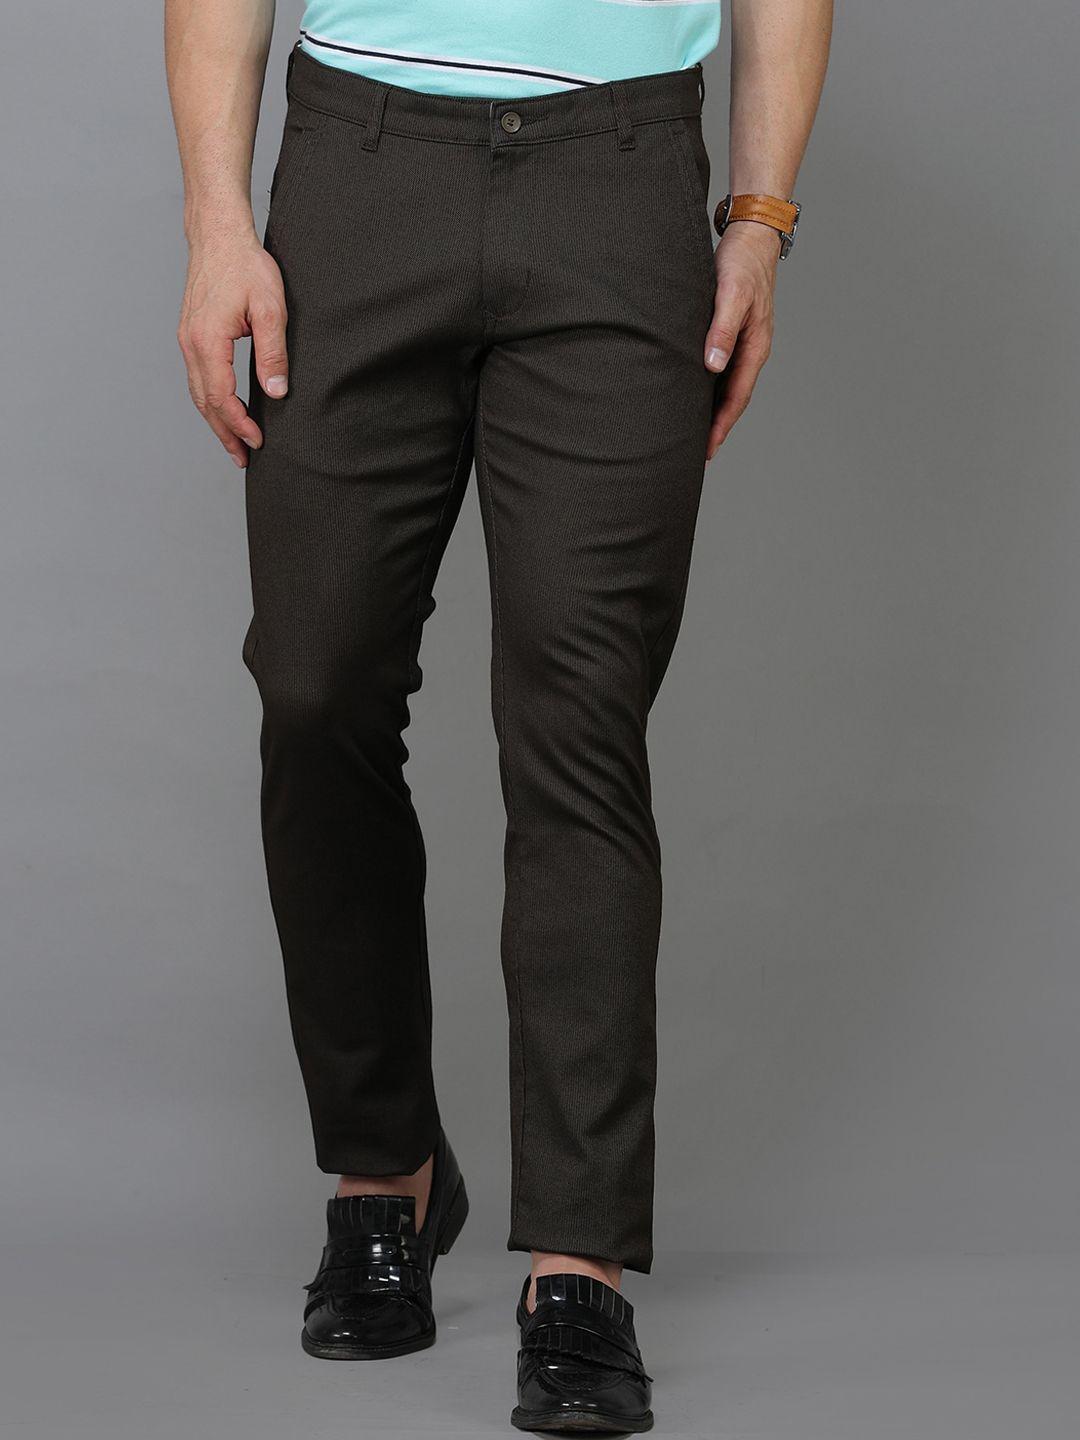 tqs-men-brown-comfort-trousers